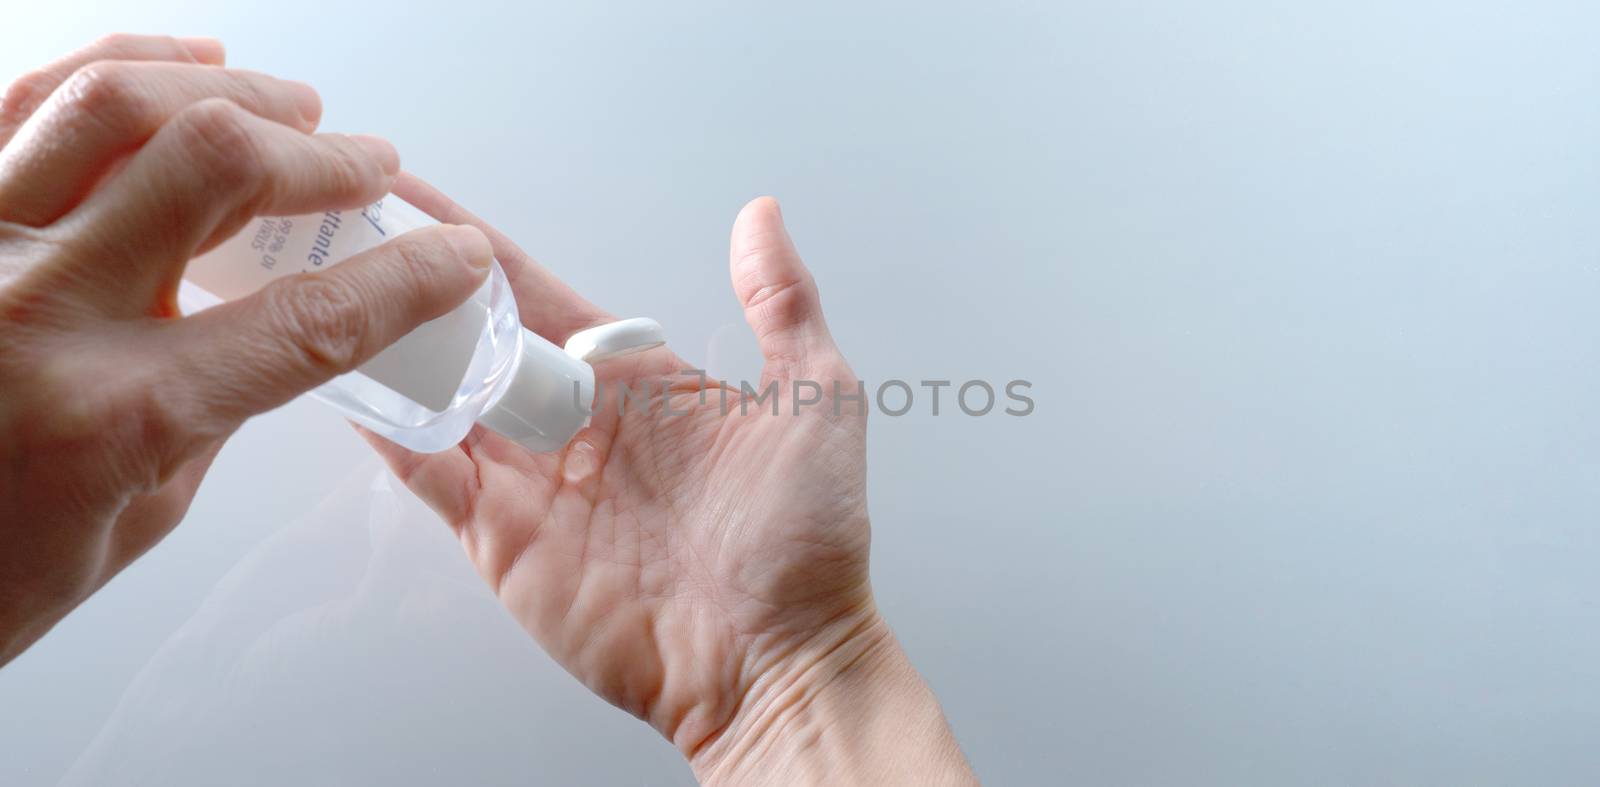 Using a bottle of hand sanitizer against viruses. by maramade